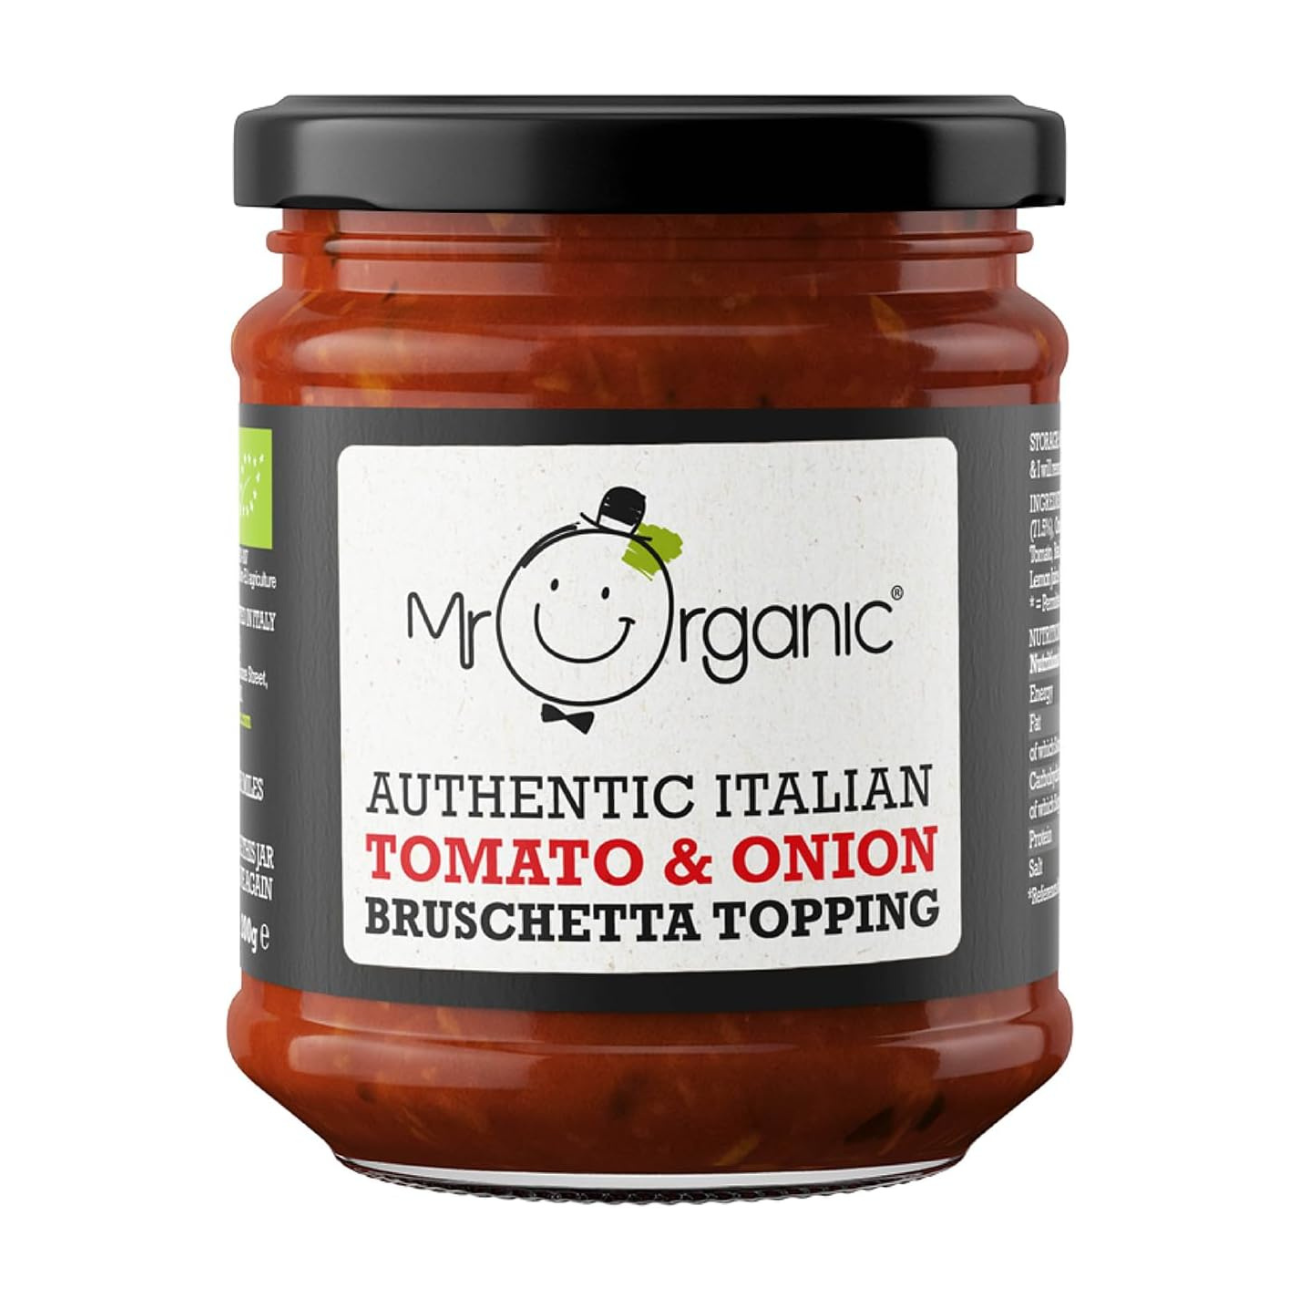 Tomato & Red Onion Italian Bruschetta Topping 200g